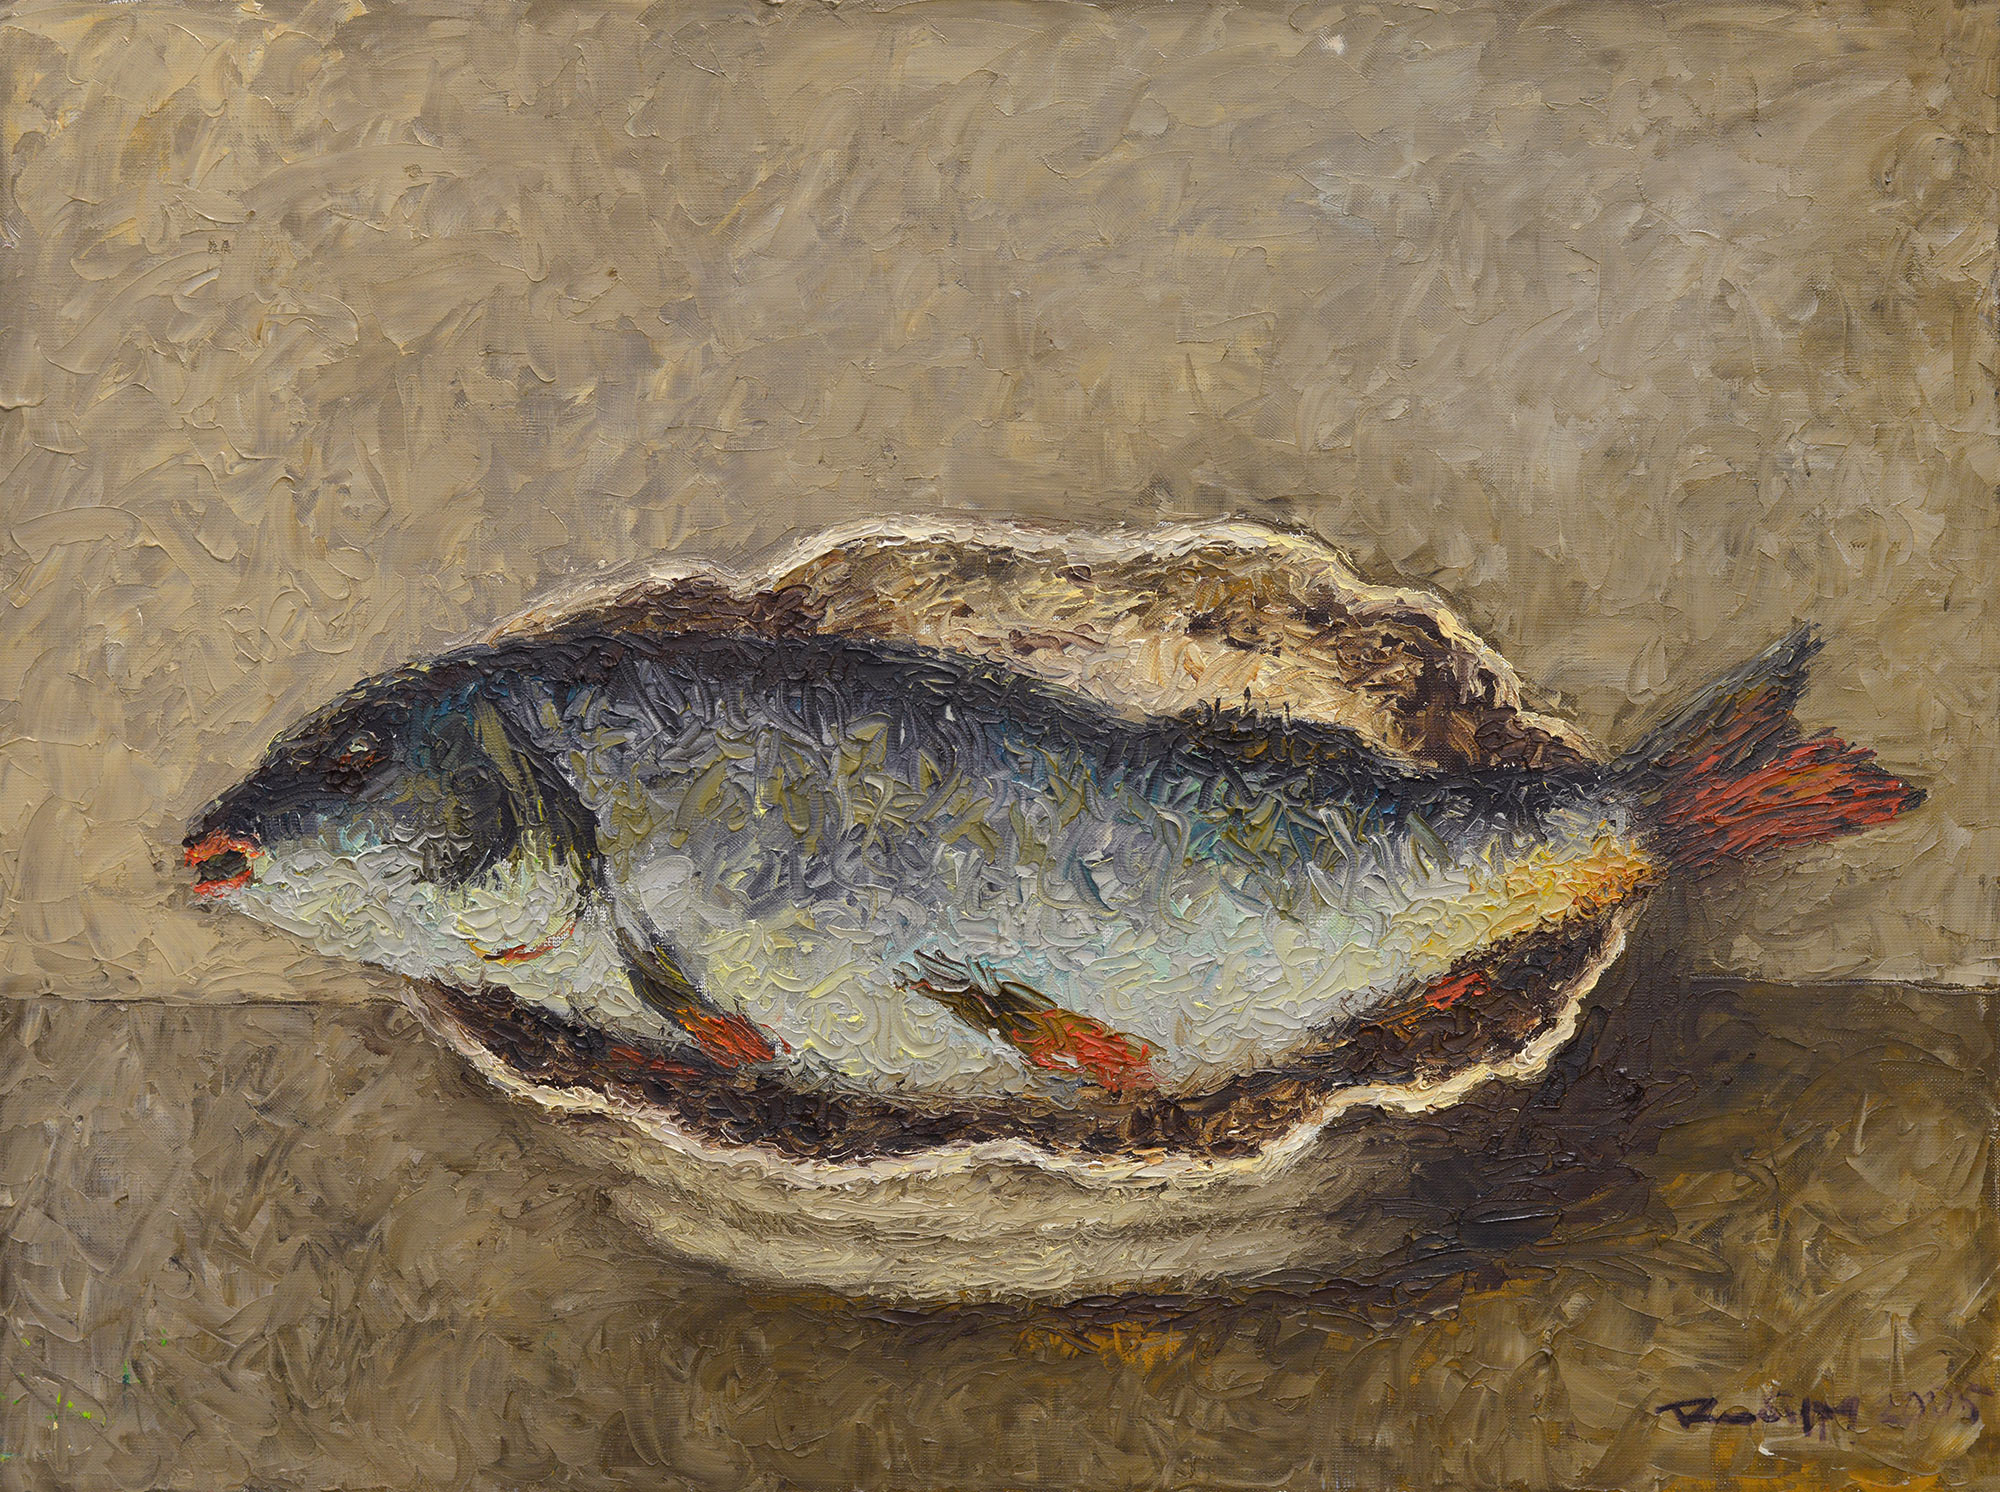 "Still life with fish", 2005